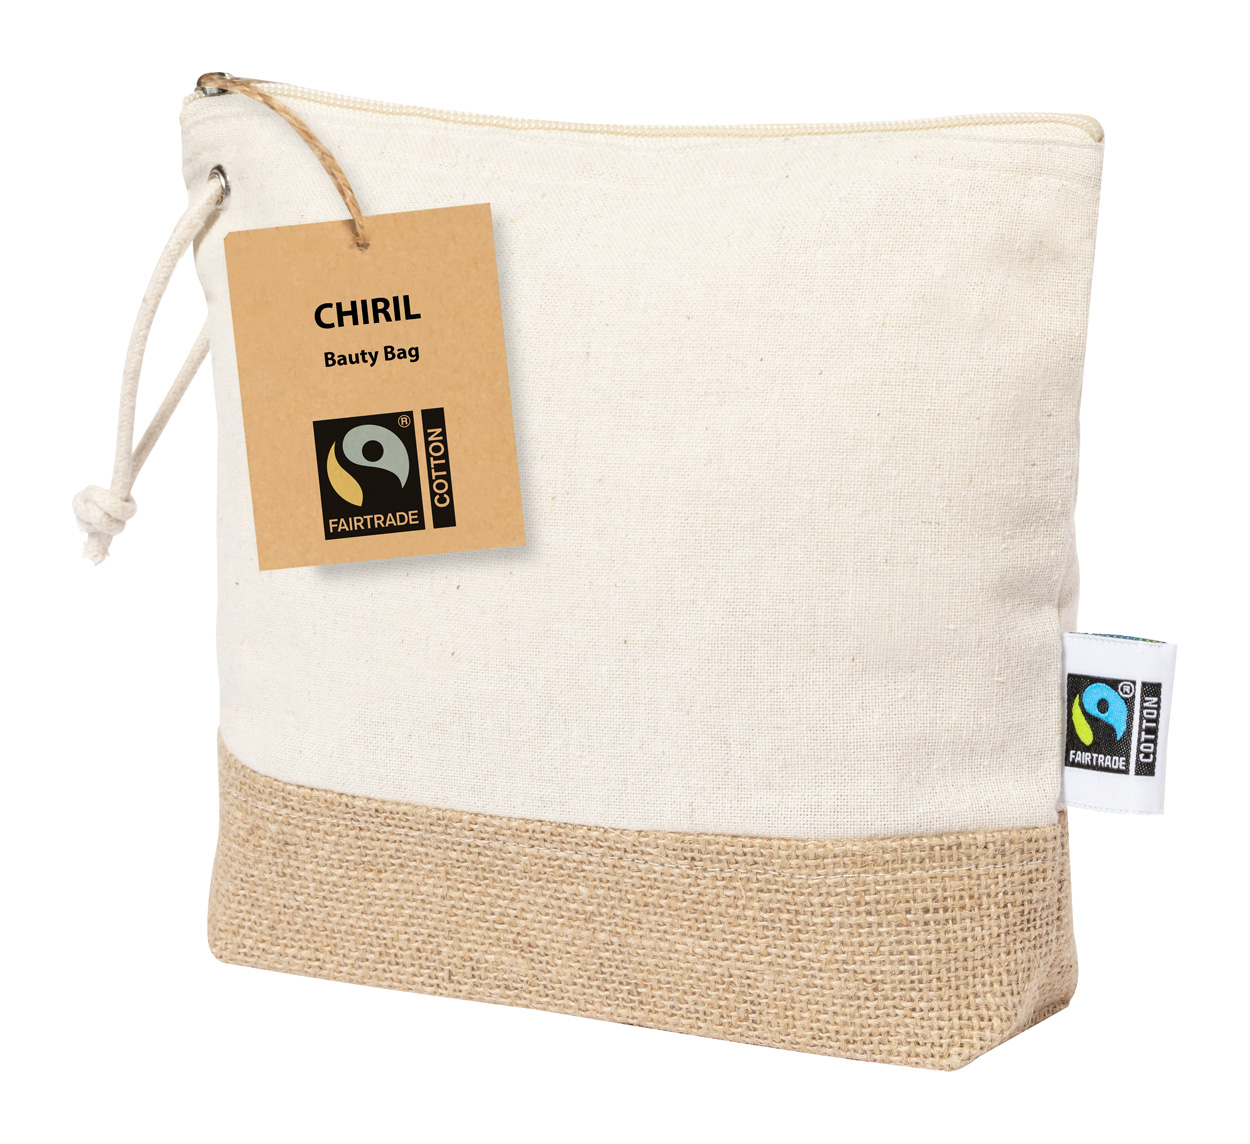 Promo  Chiril Fairtrade cosmetic bag